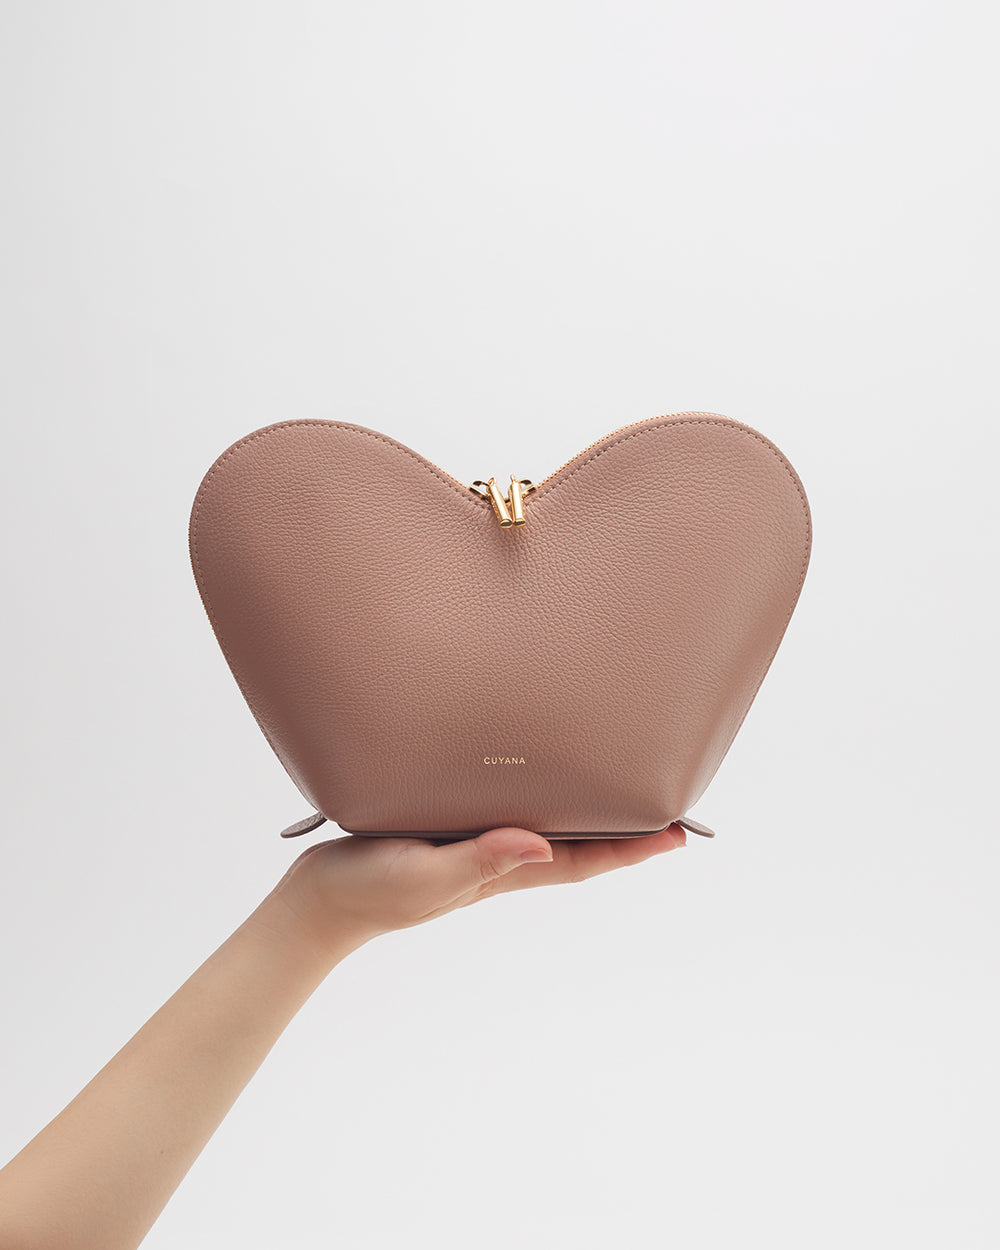 A hand holding a heart-shaped clutch bag.